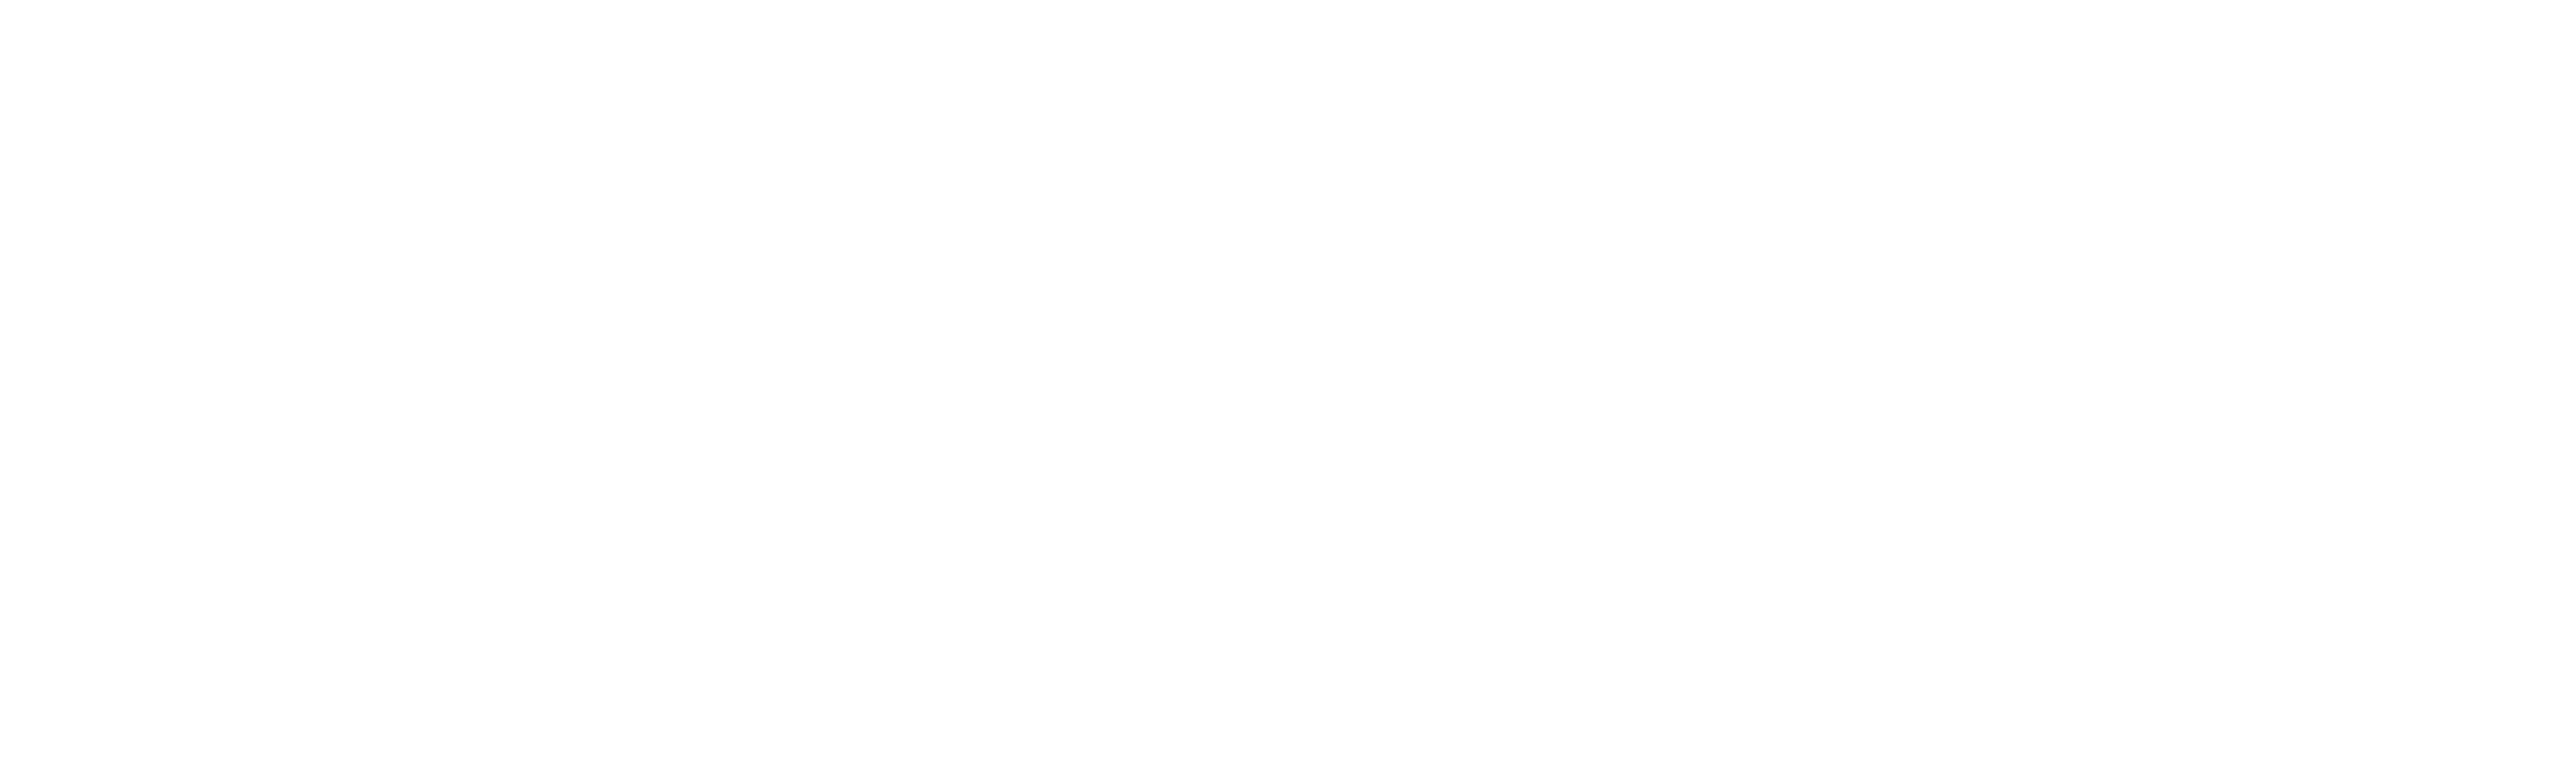 MOAK Studio | Contemporary Product Design Studio